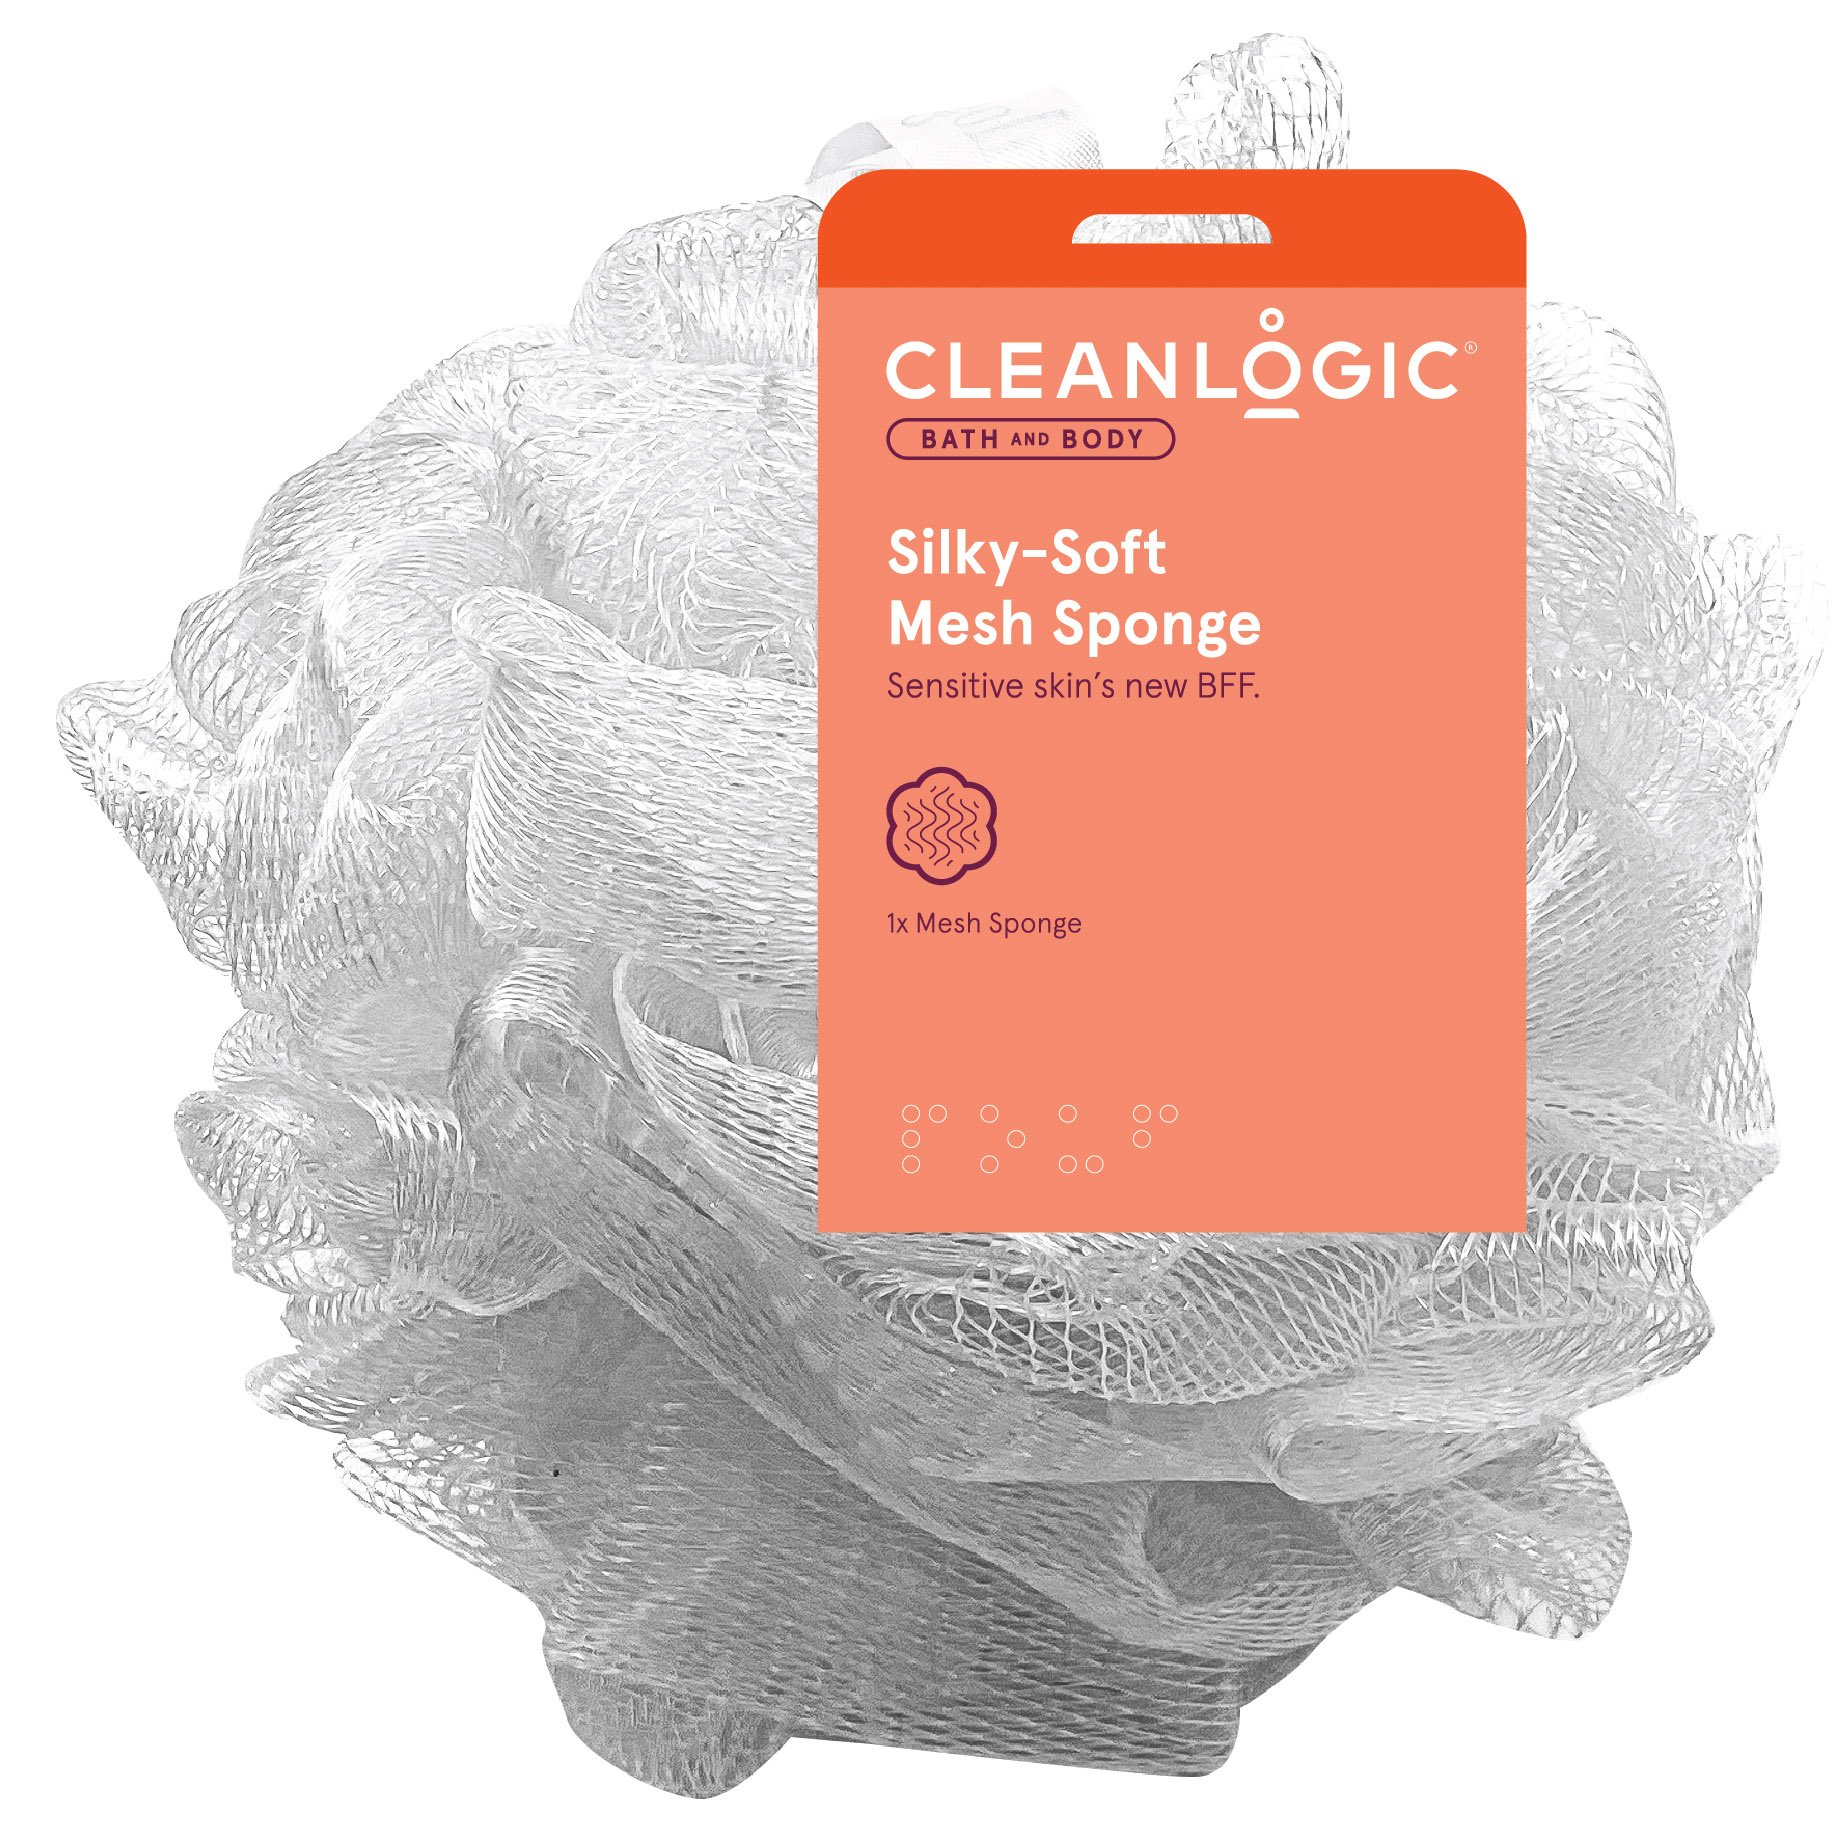 Cleanlogic Silky-Soft Mesh Sponge - Shop Accessories at H-E-B